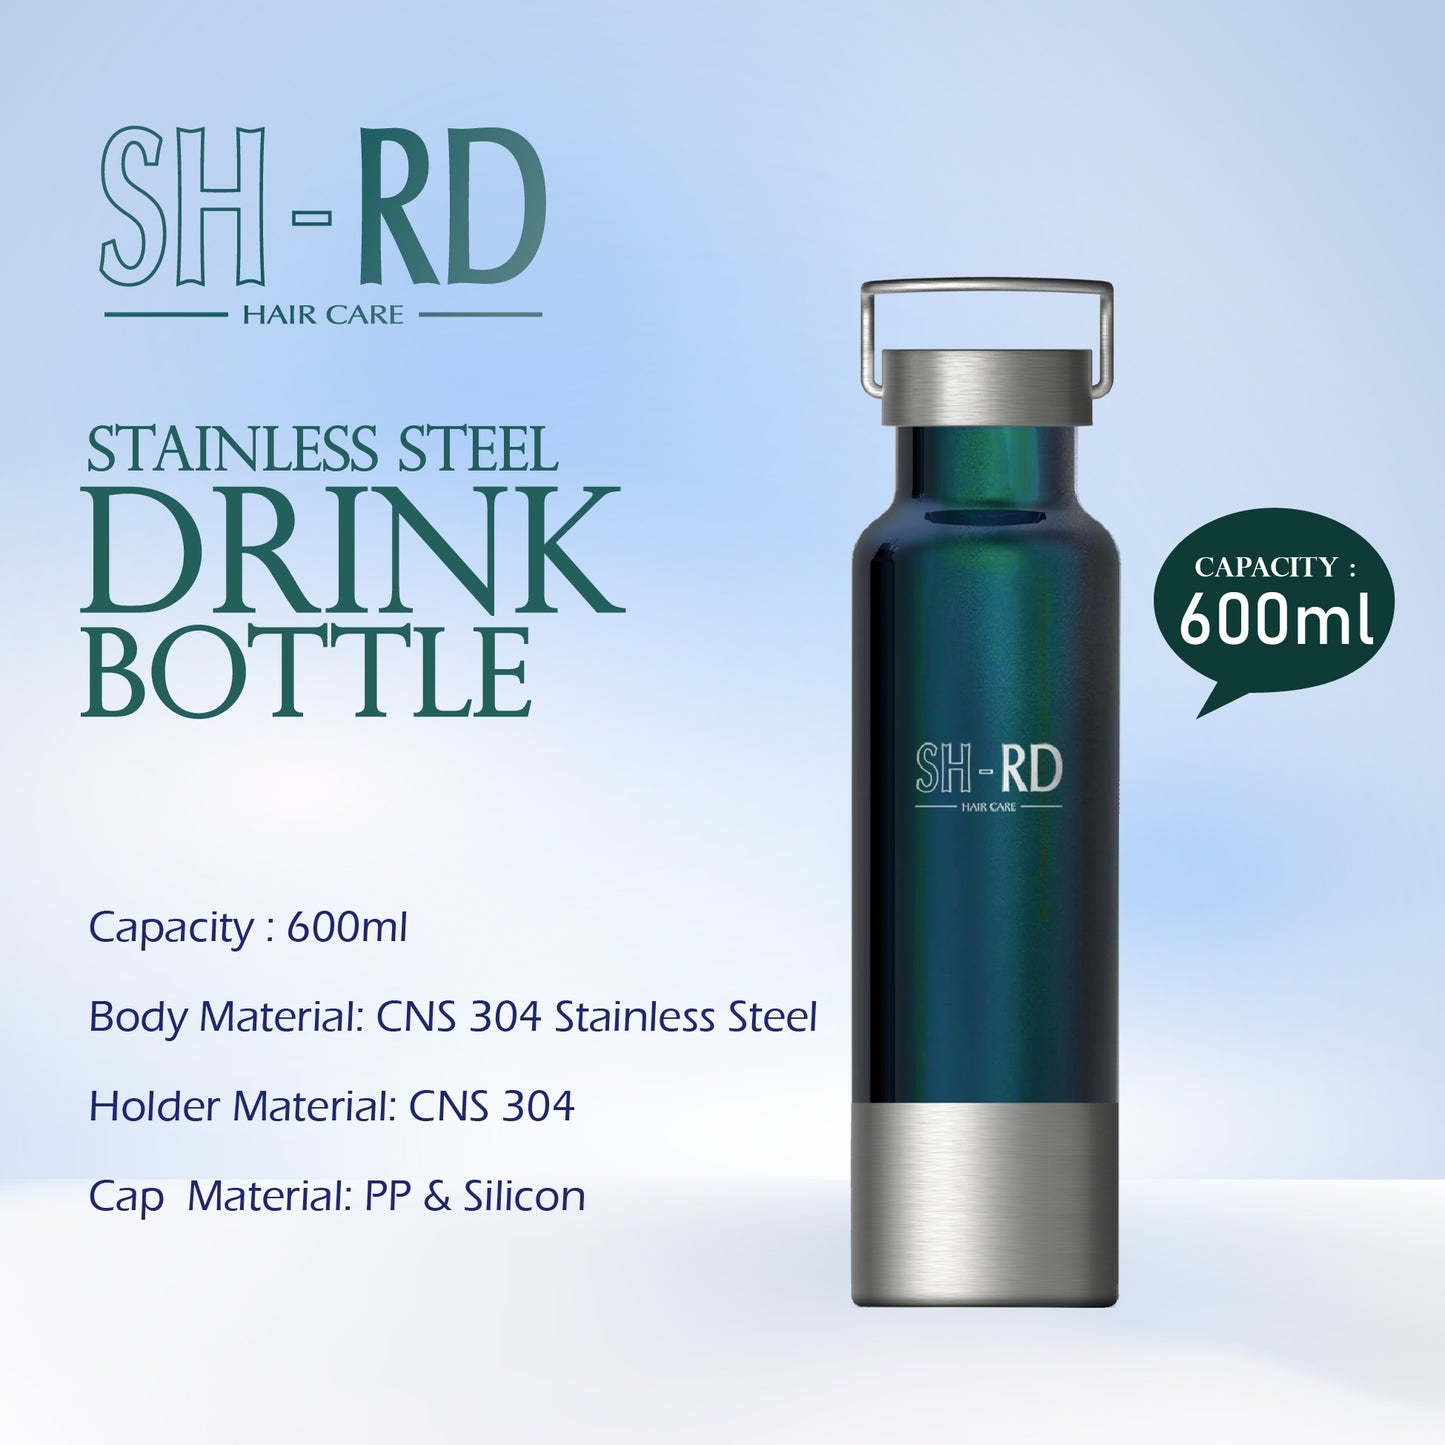 SH-RD Stainless Steel Drink Bottle